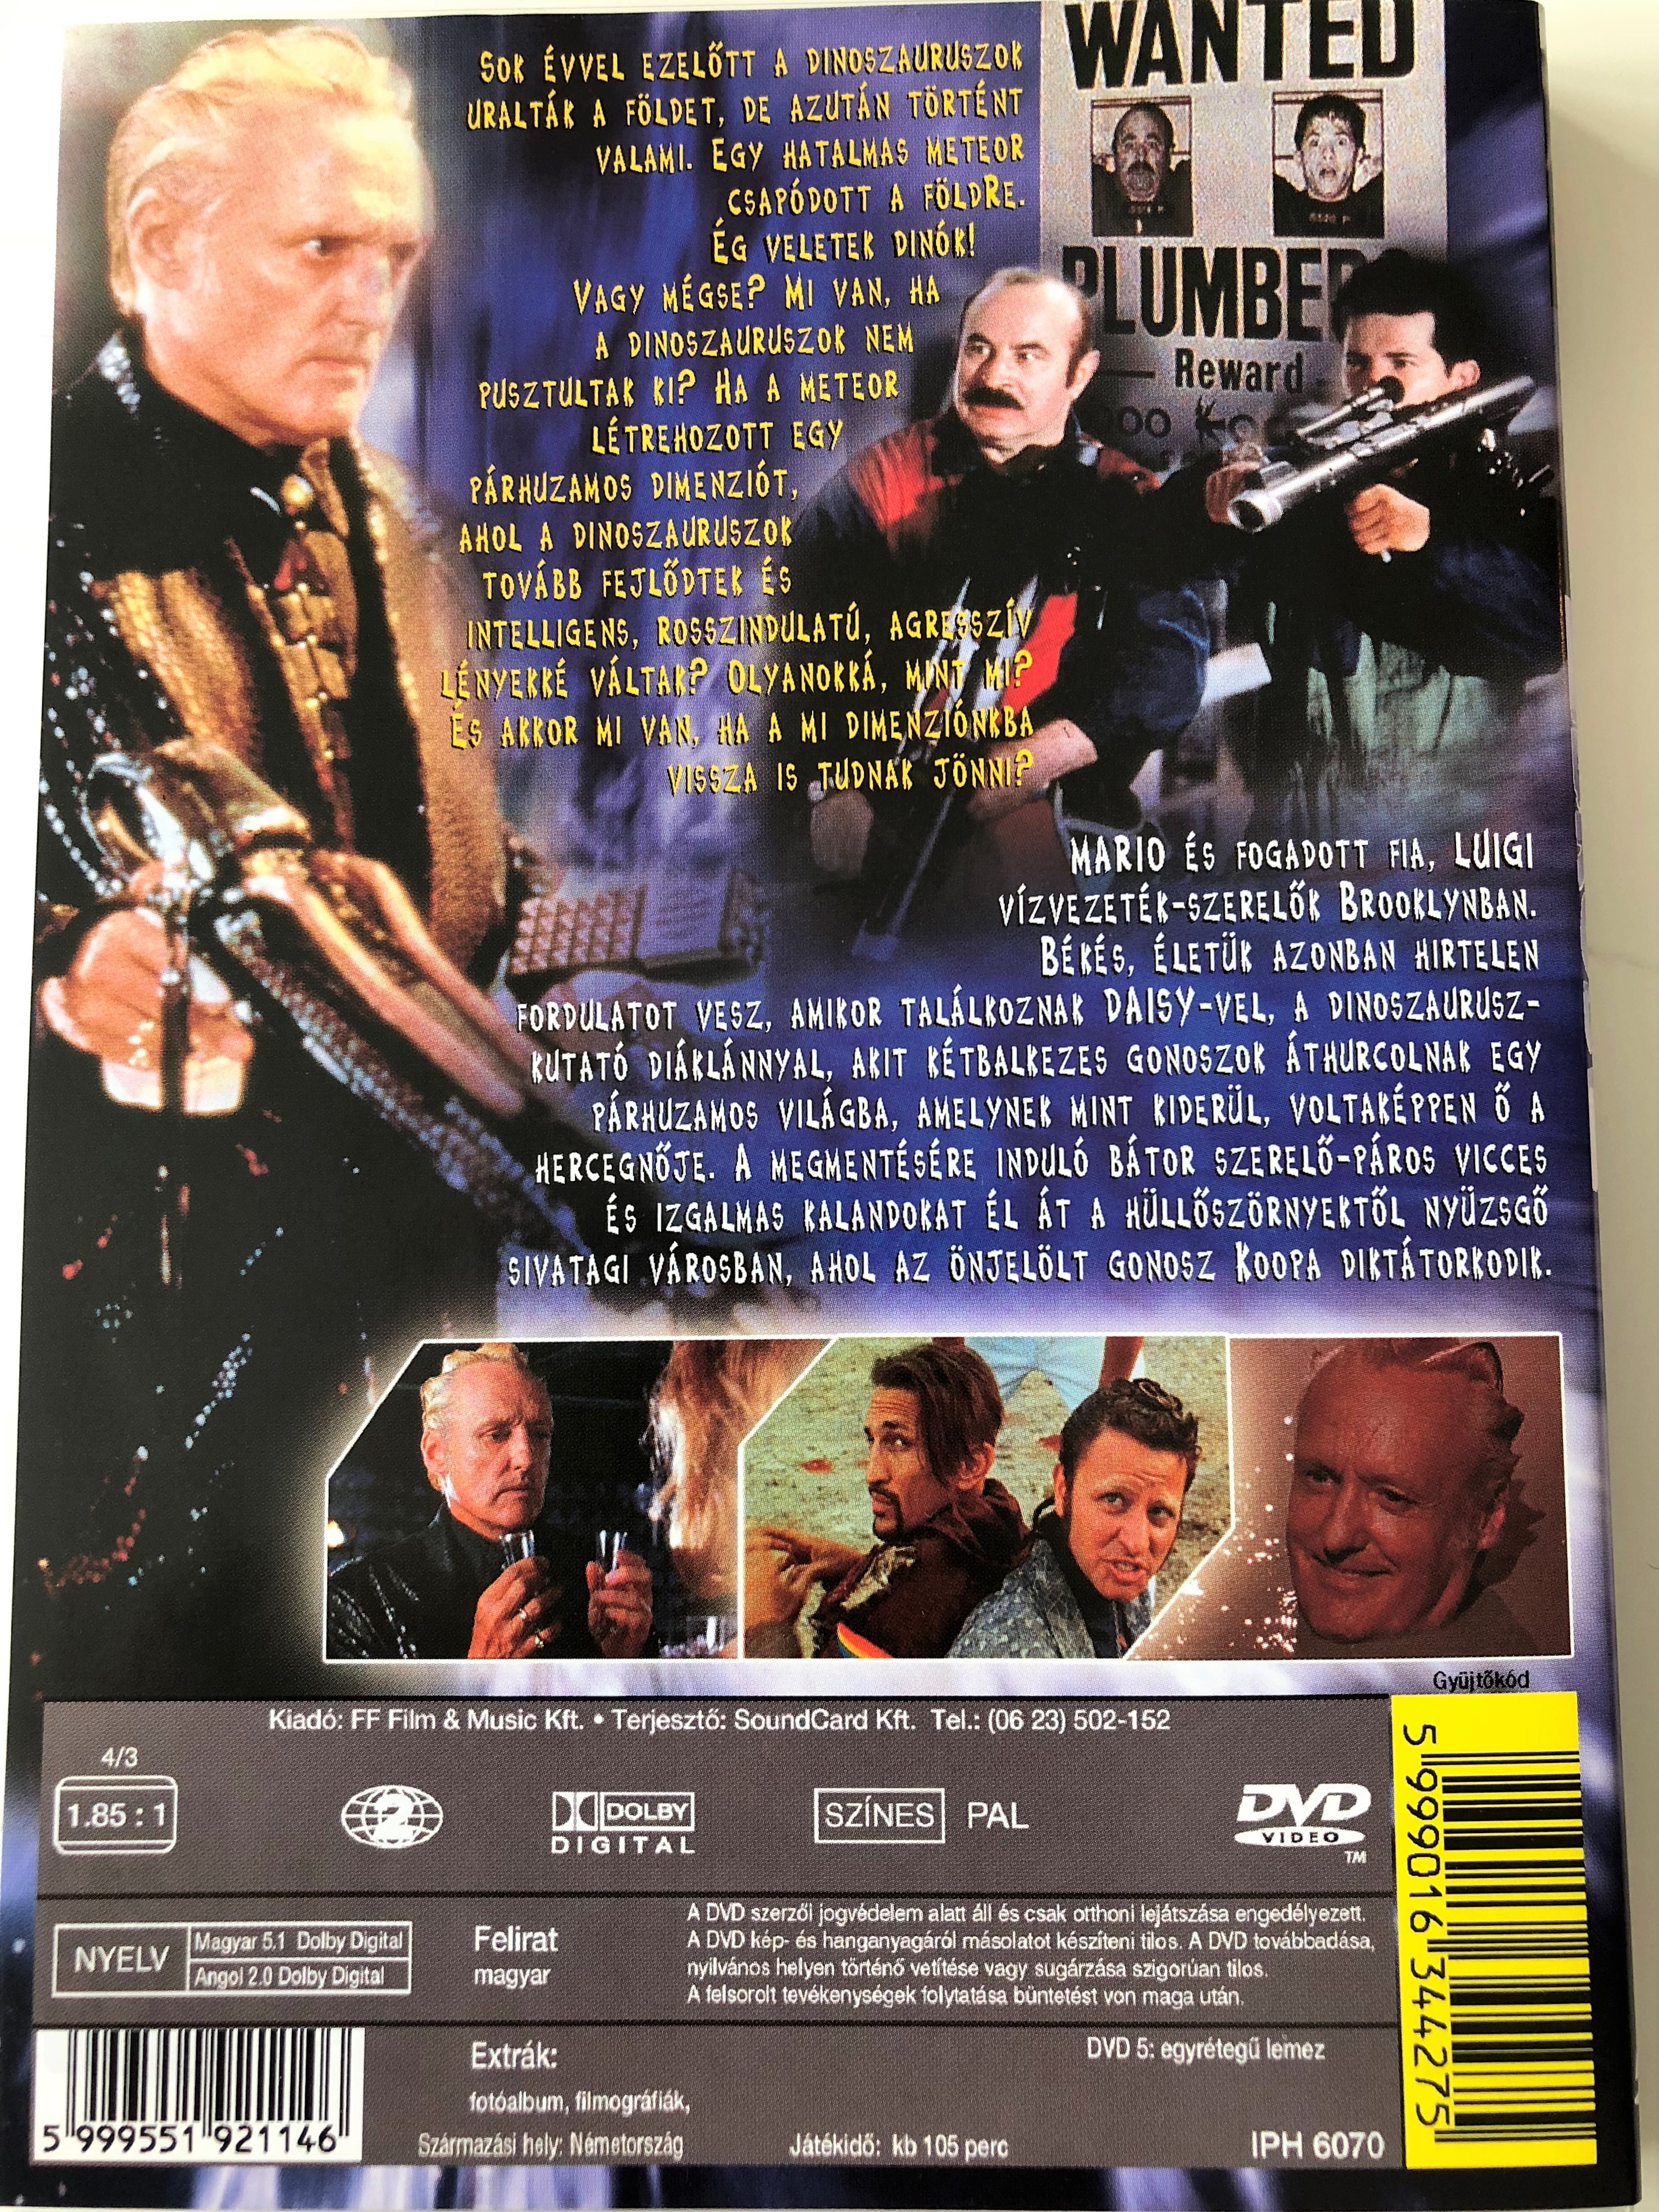 super-mario-bros-dvd-1993-directed-by-rocky-morton-annabel-jankel-starring-bob-hoskins-john-leguizamo-dennis-hopper-samantha-mathis-fisher-stevens-fiona-shaw-richard-edson-based-on-nintendo-s-super-mario-1.jpg